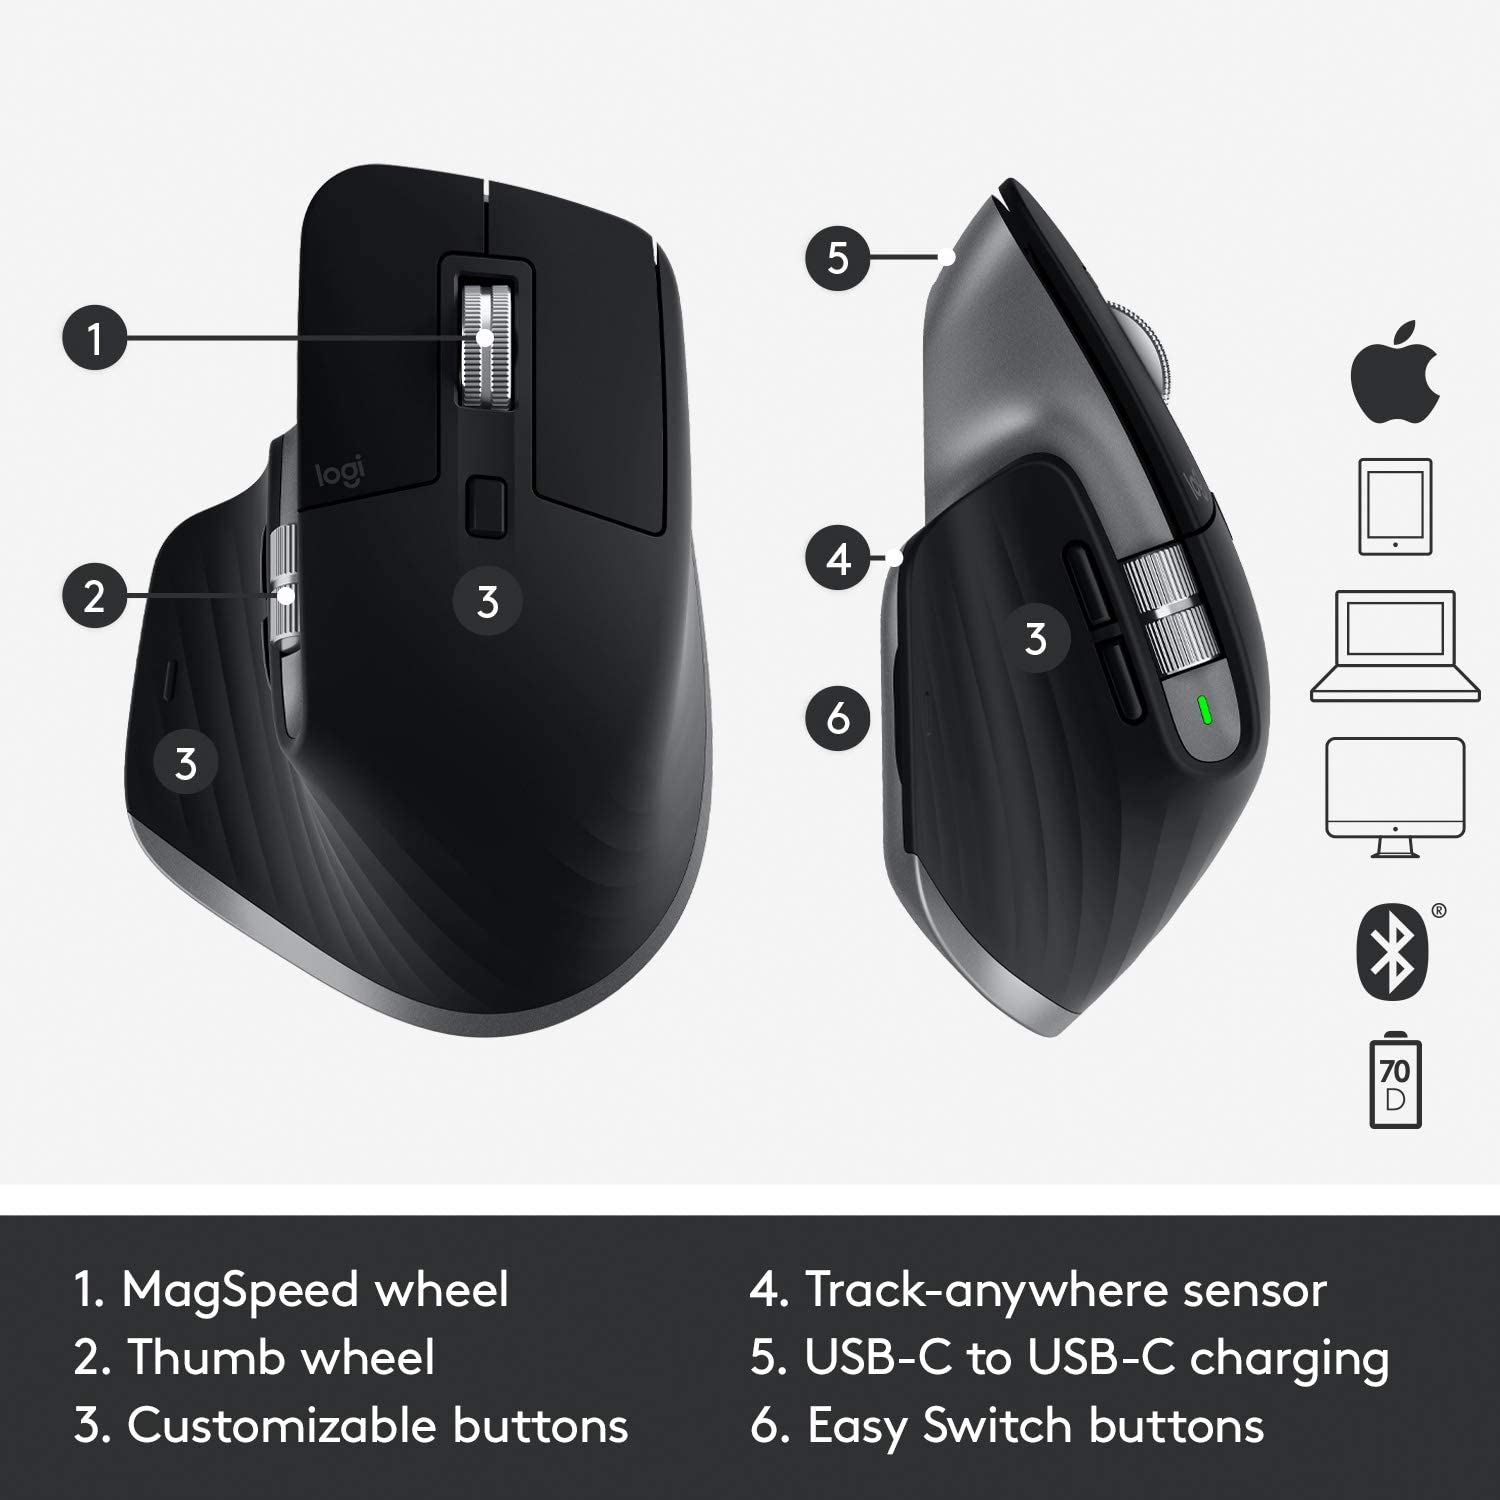 موس بی سیم لاجیتک Logitech MX Master 3  Advanced Wireless Mouse for Mac - ارسال ۱۰ الی ۱۵ روز کاری